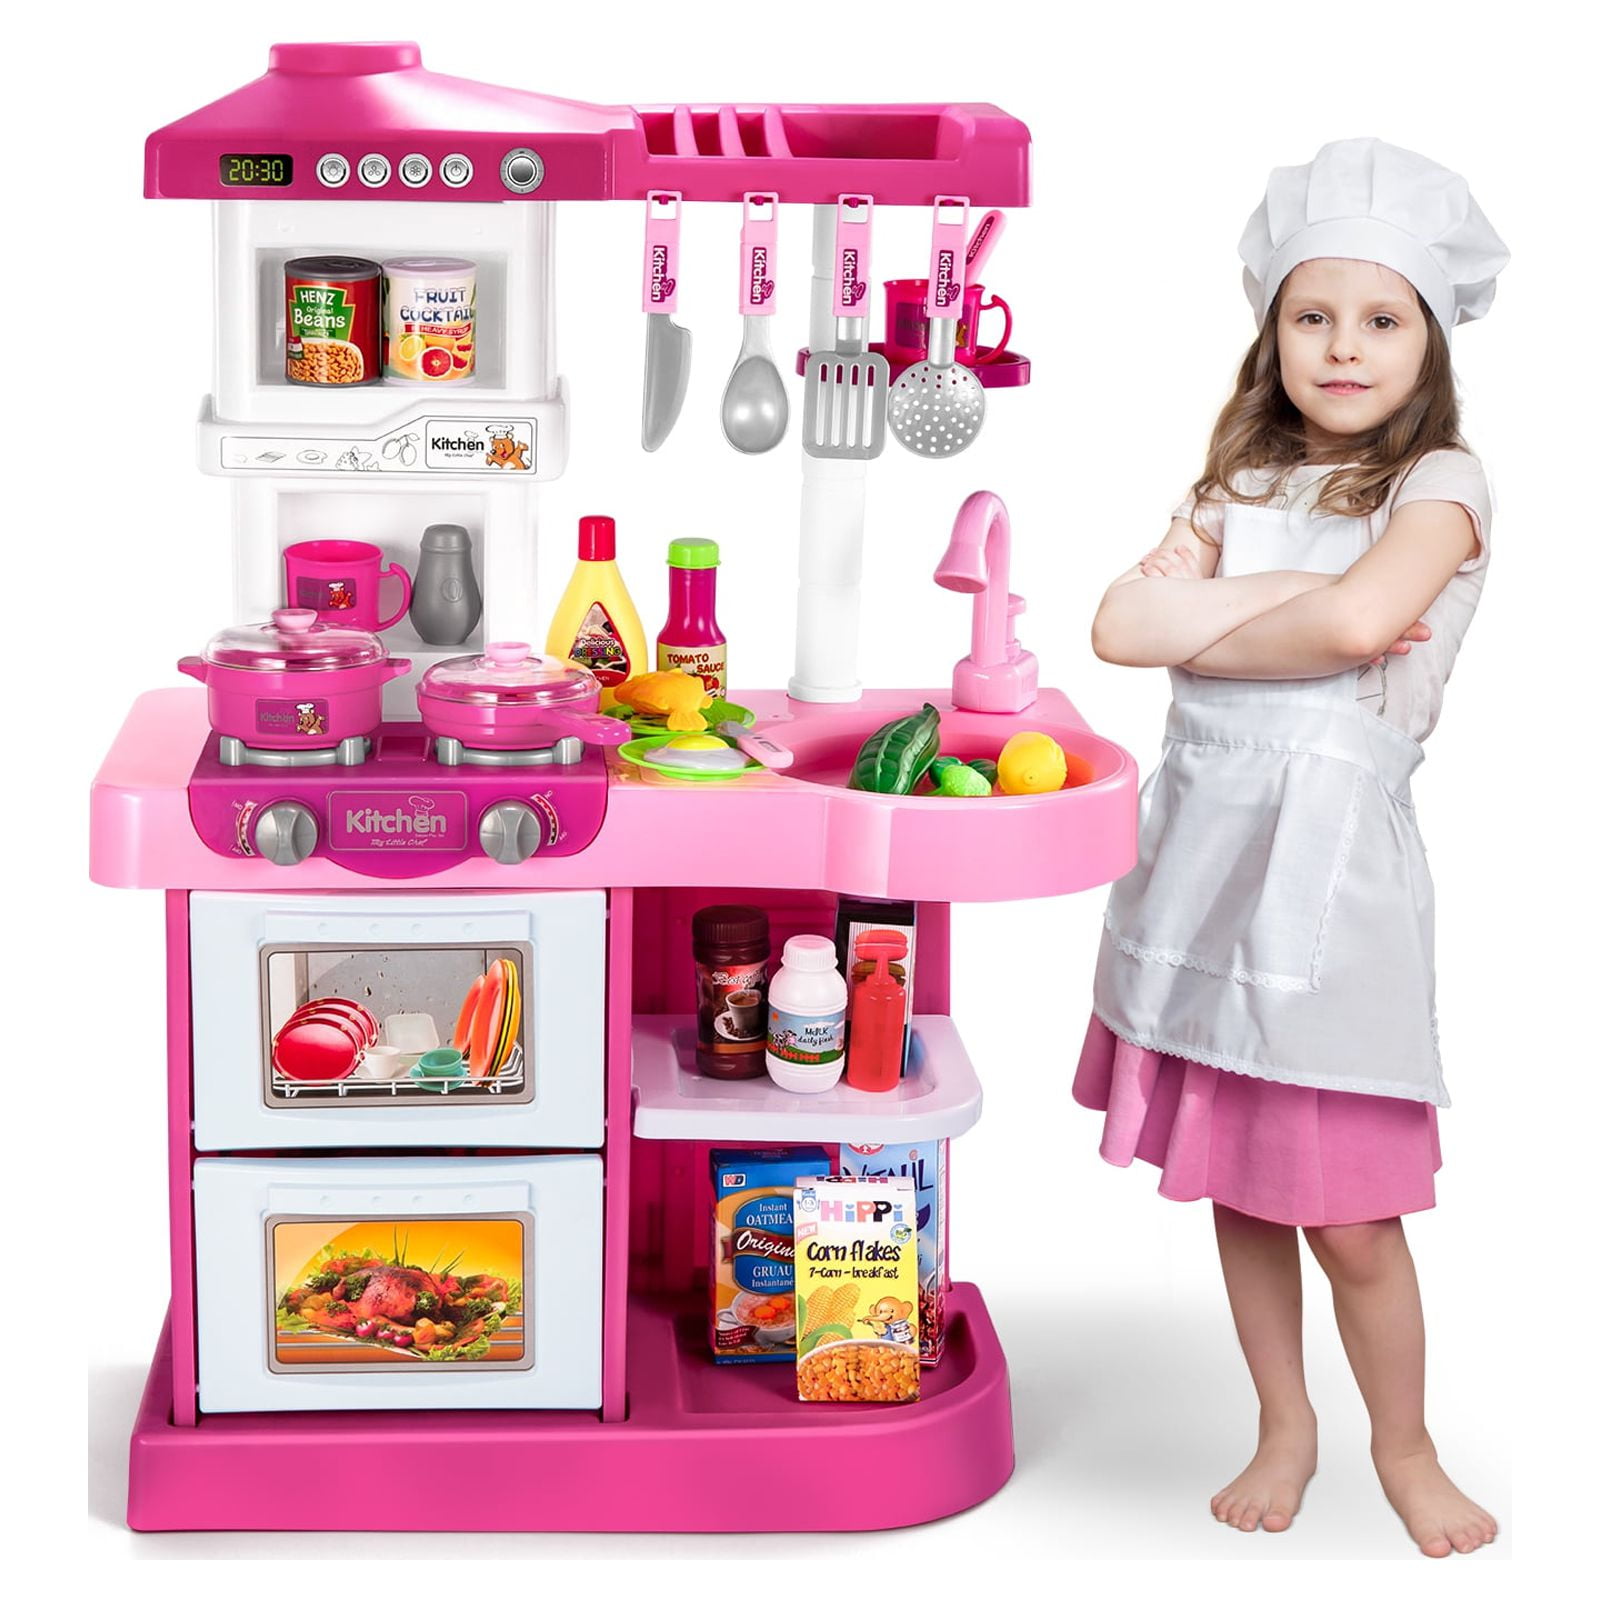 Beefunni 34 inch Blue Play Kitchen Girls Toy Pretend Food Sets